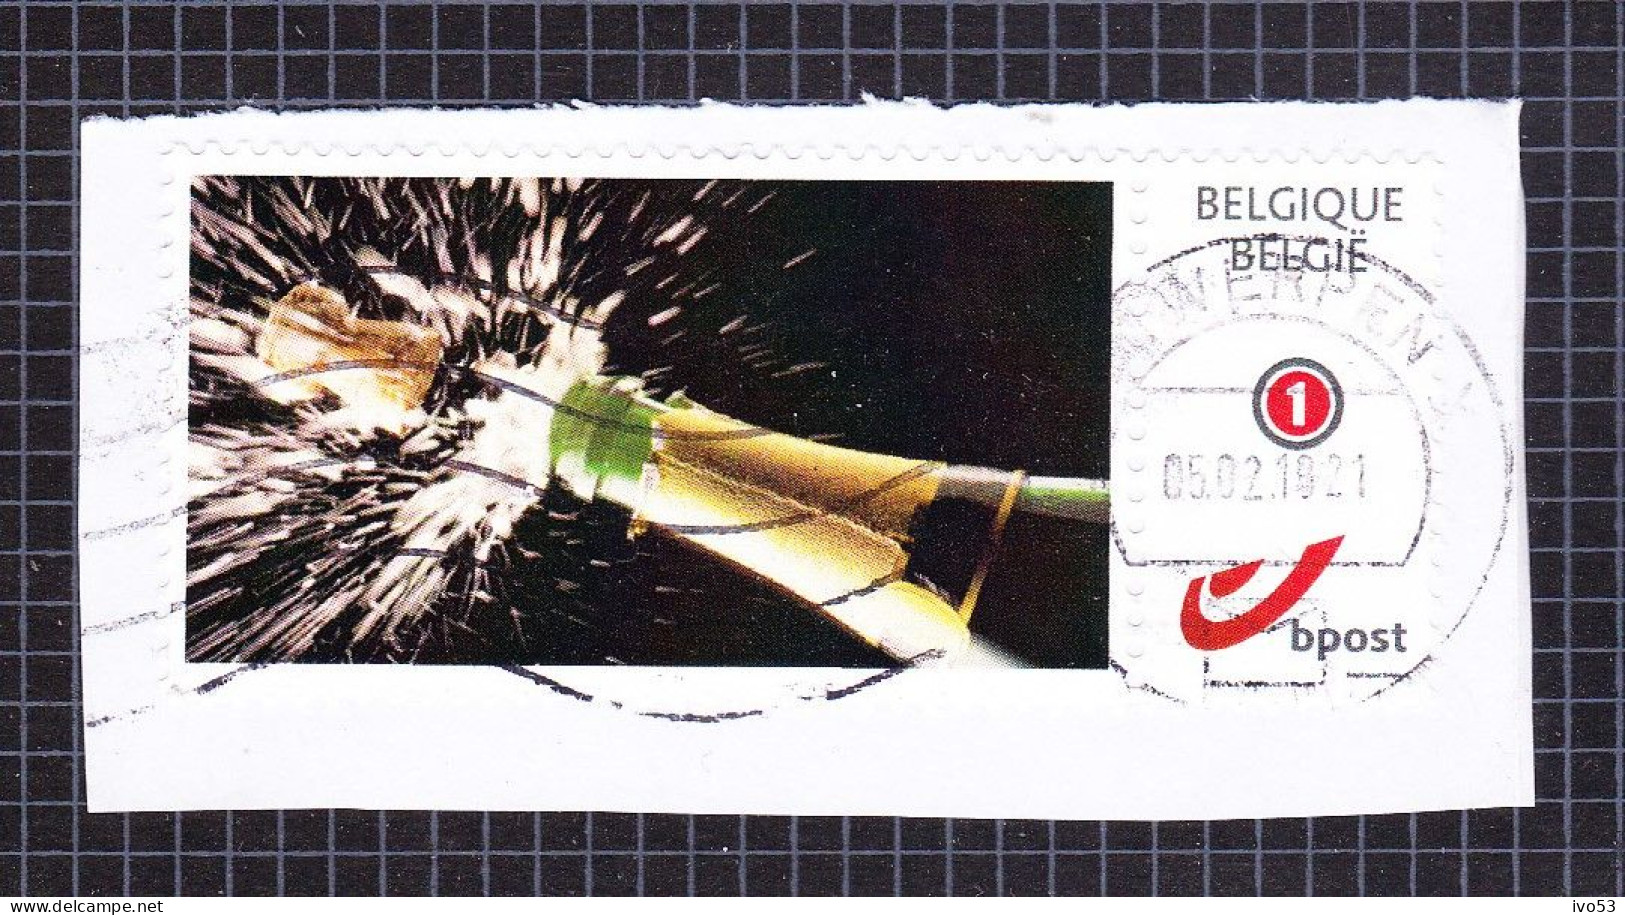 2011 Nr 4182/83 Duo-stamp / My Stamp,gestempeld Op Fragment. - Usados